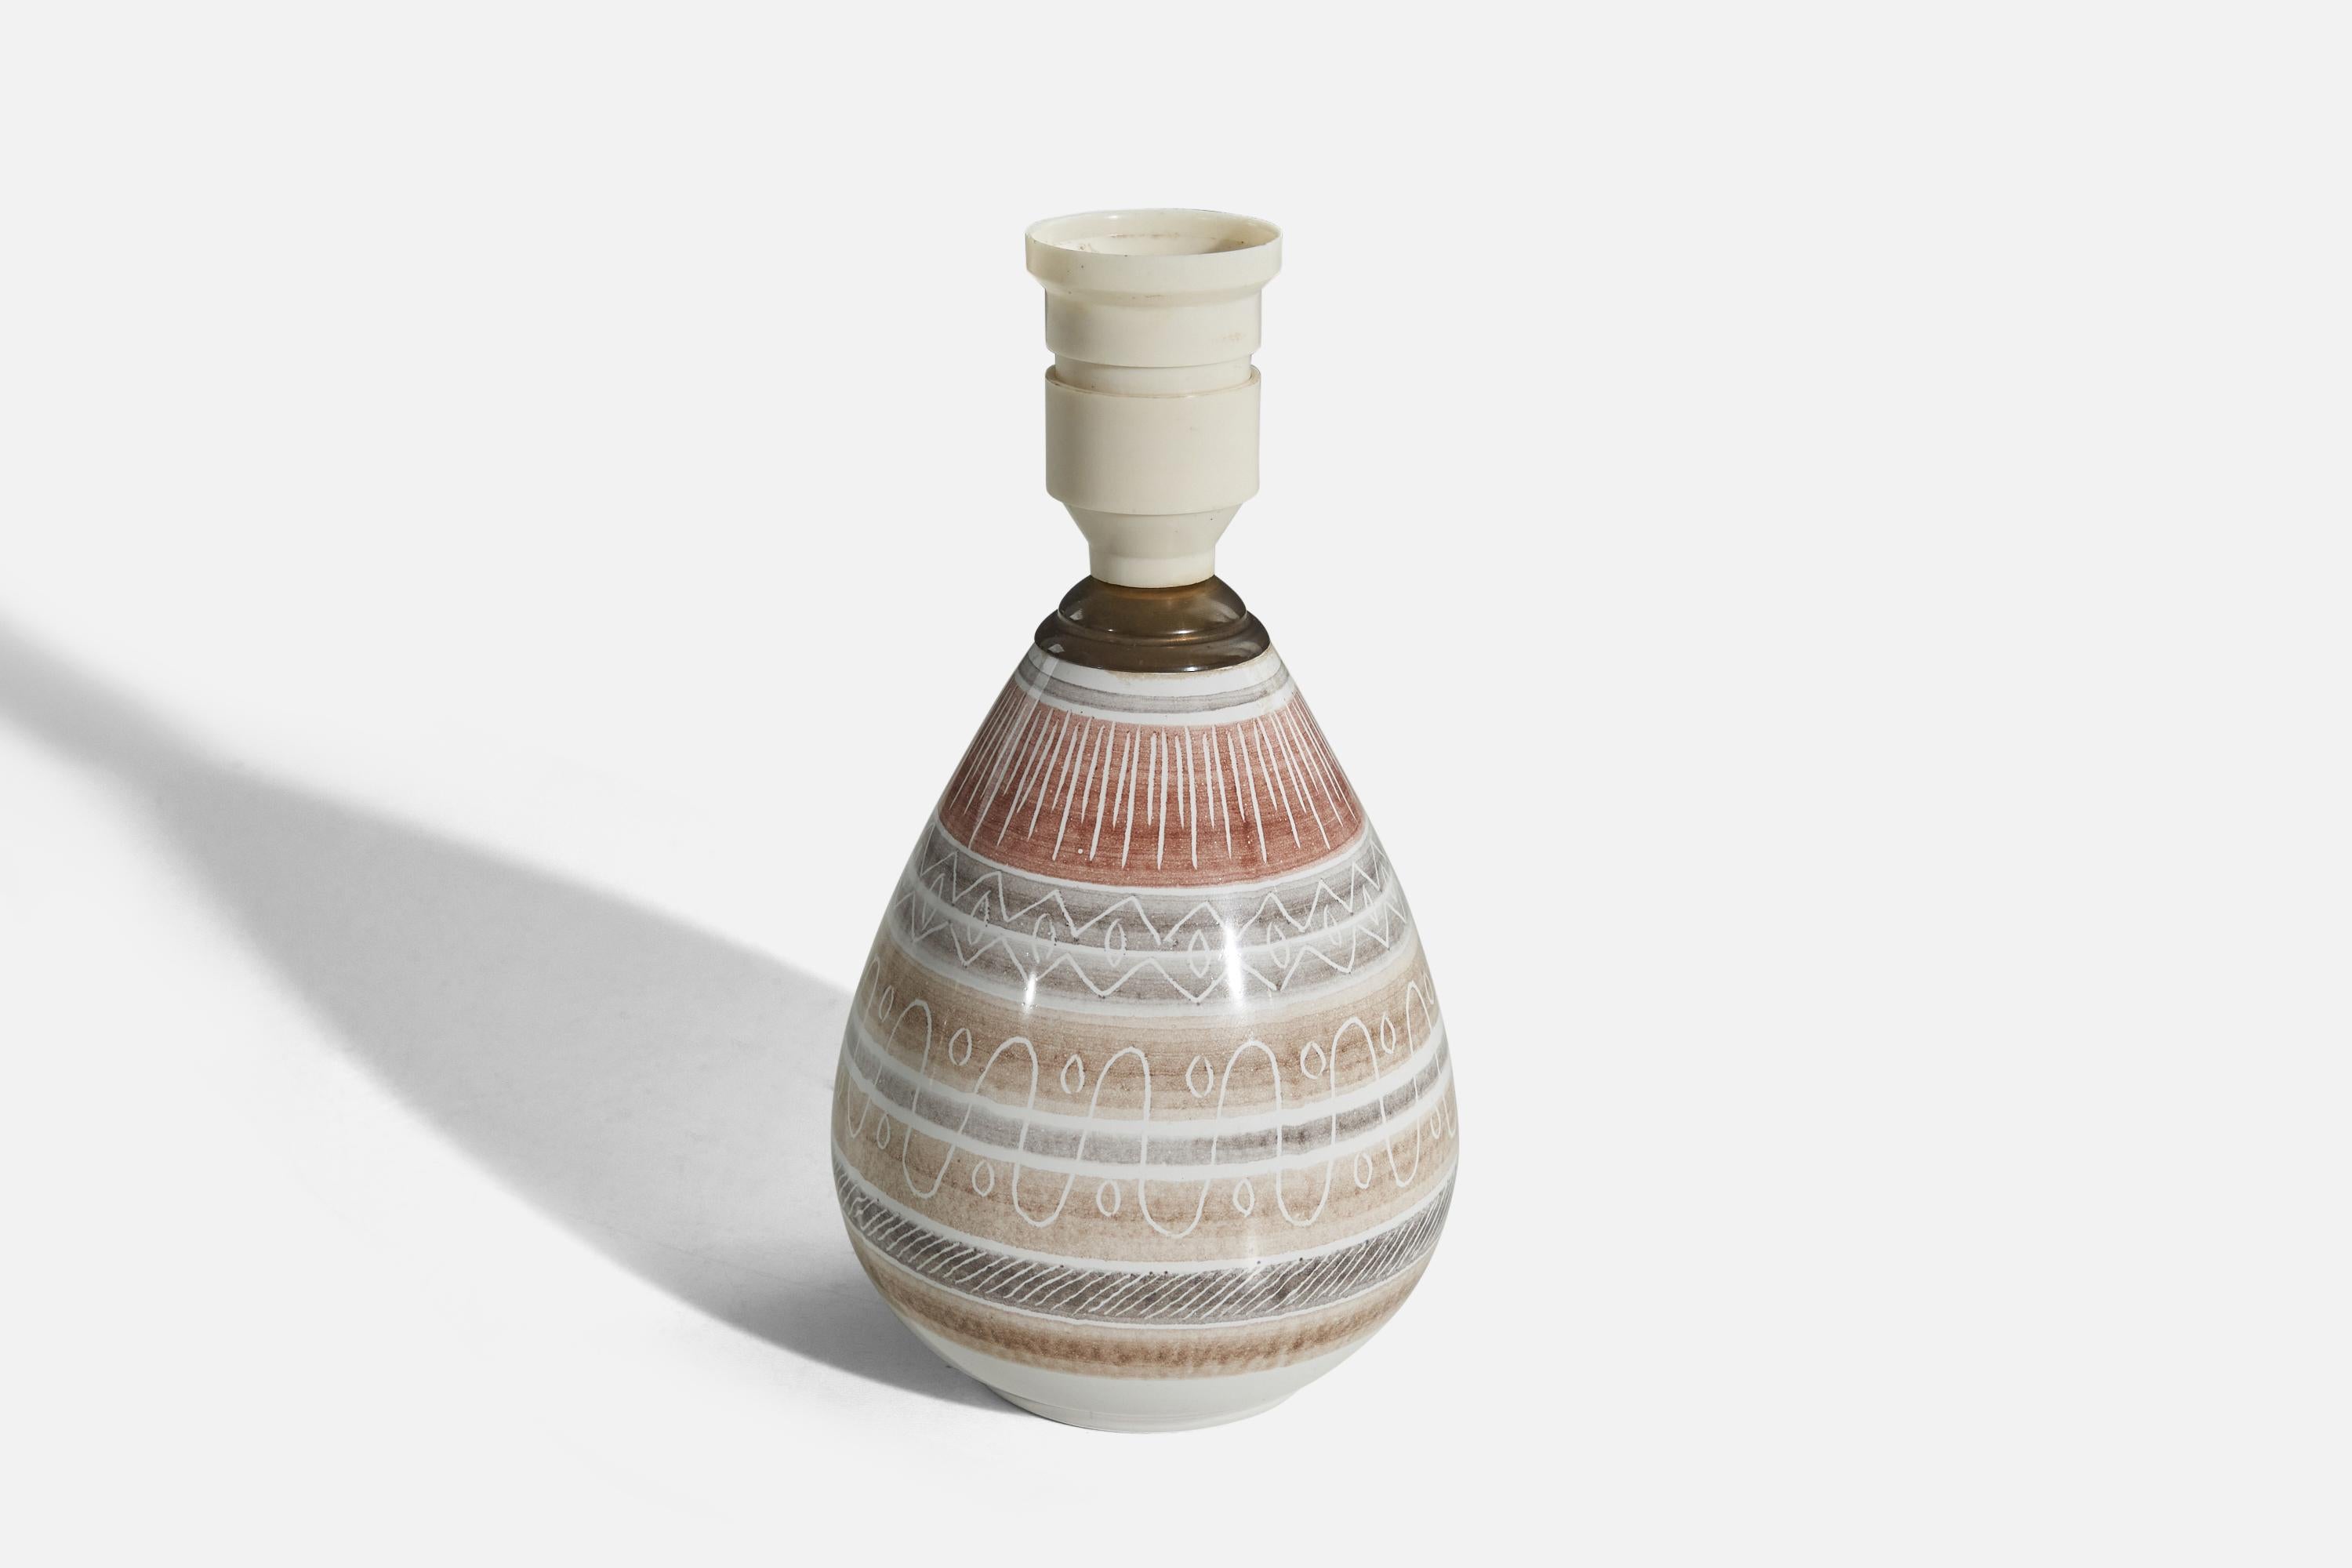 Mørkøv Keramikfabrik, Table Lamp, Glazed Stoneware, Denmark, c. 1960s In Good Condition For Sale In High Point, NC